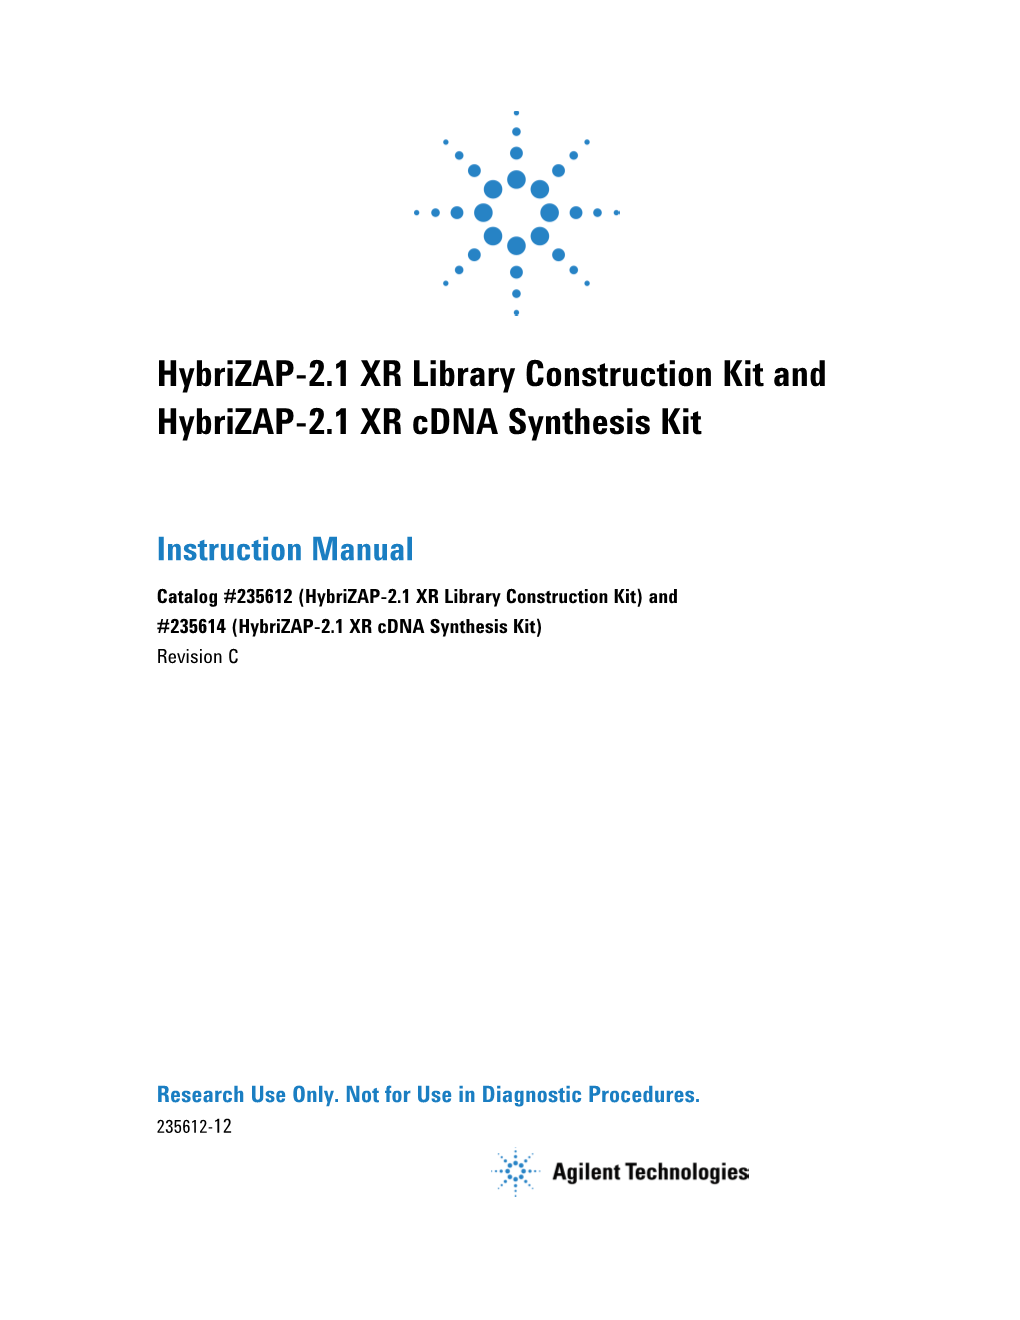 Manual: Hybrizap-2.1 XR Library Construction Kit and Hybrizap-2.1